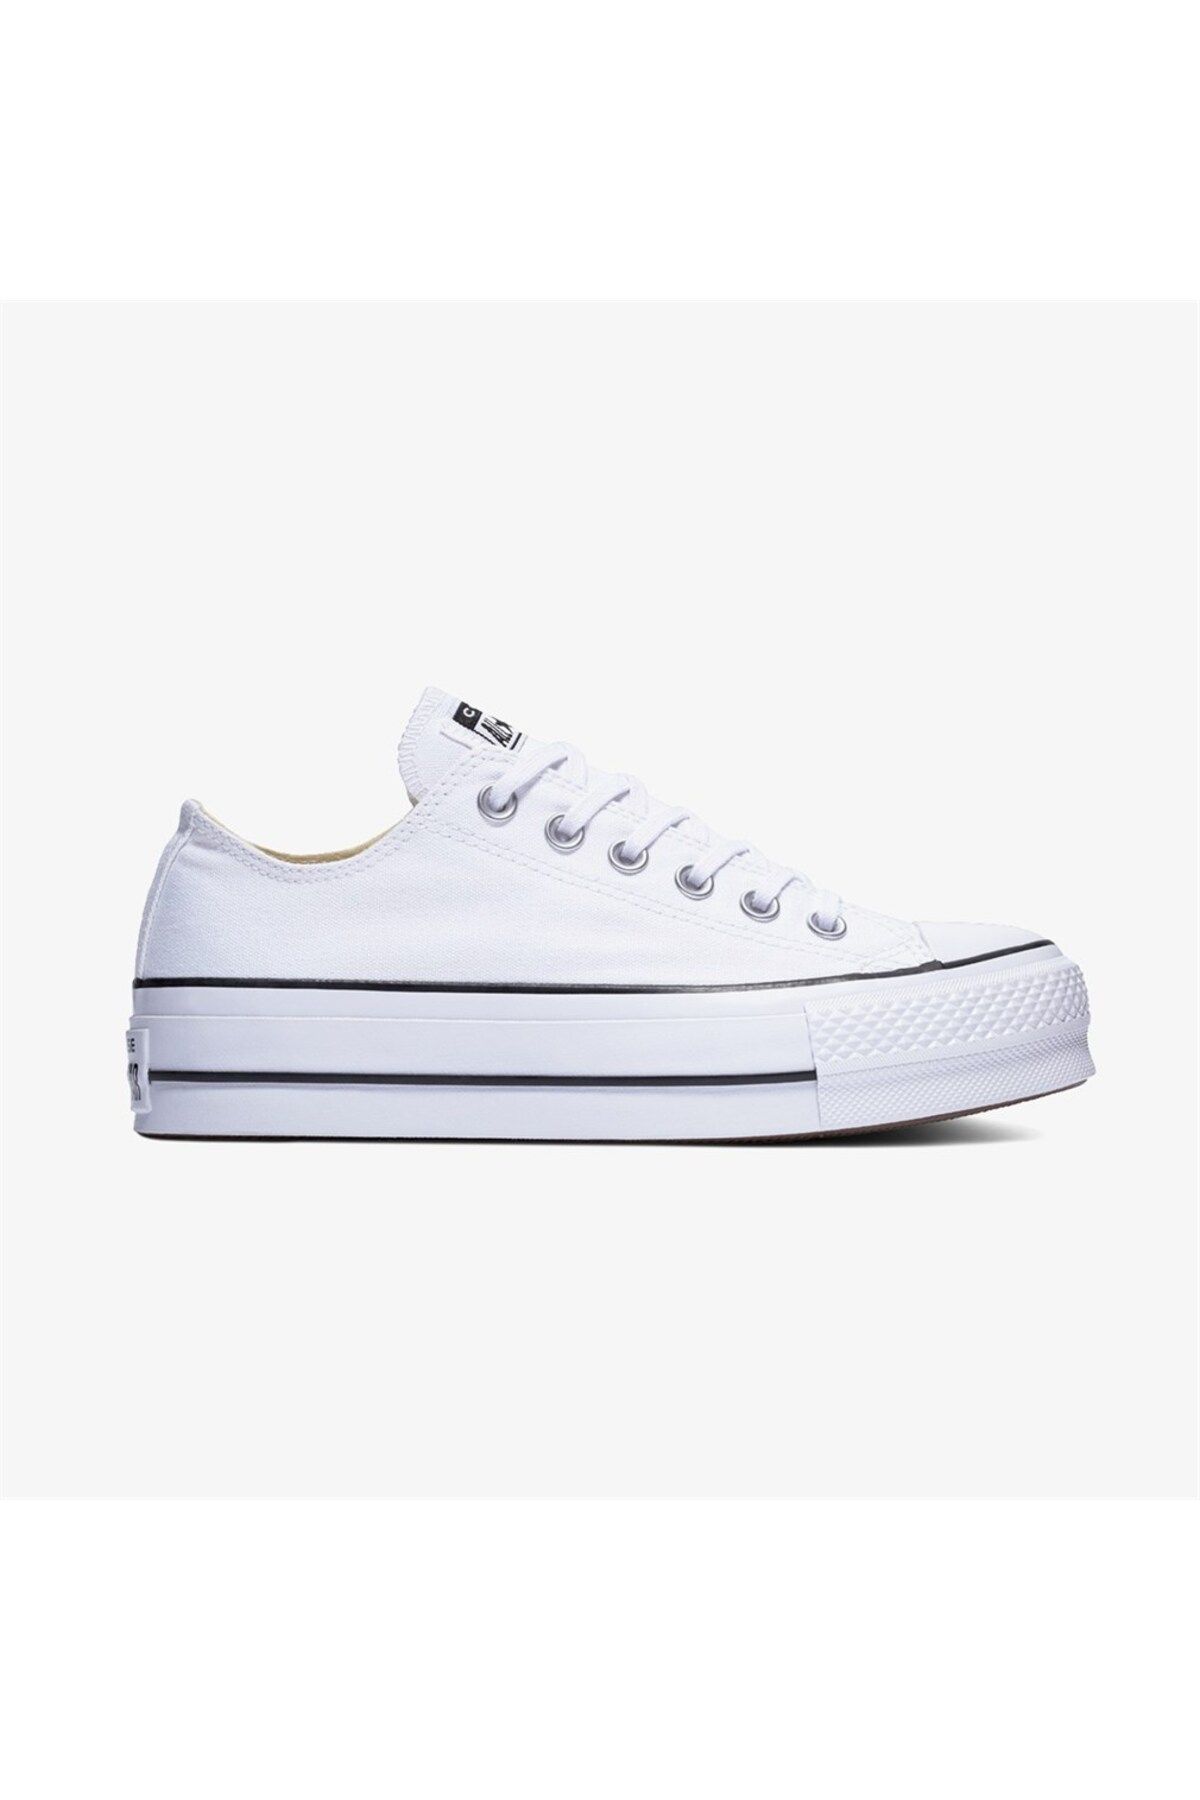 Converse CHUCK TAYLOR ALL STAR LIFT Beyaz-Siyah Kadın Sneaker